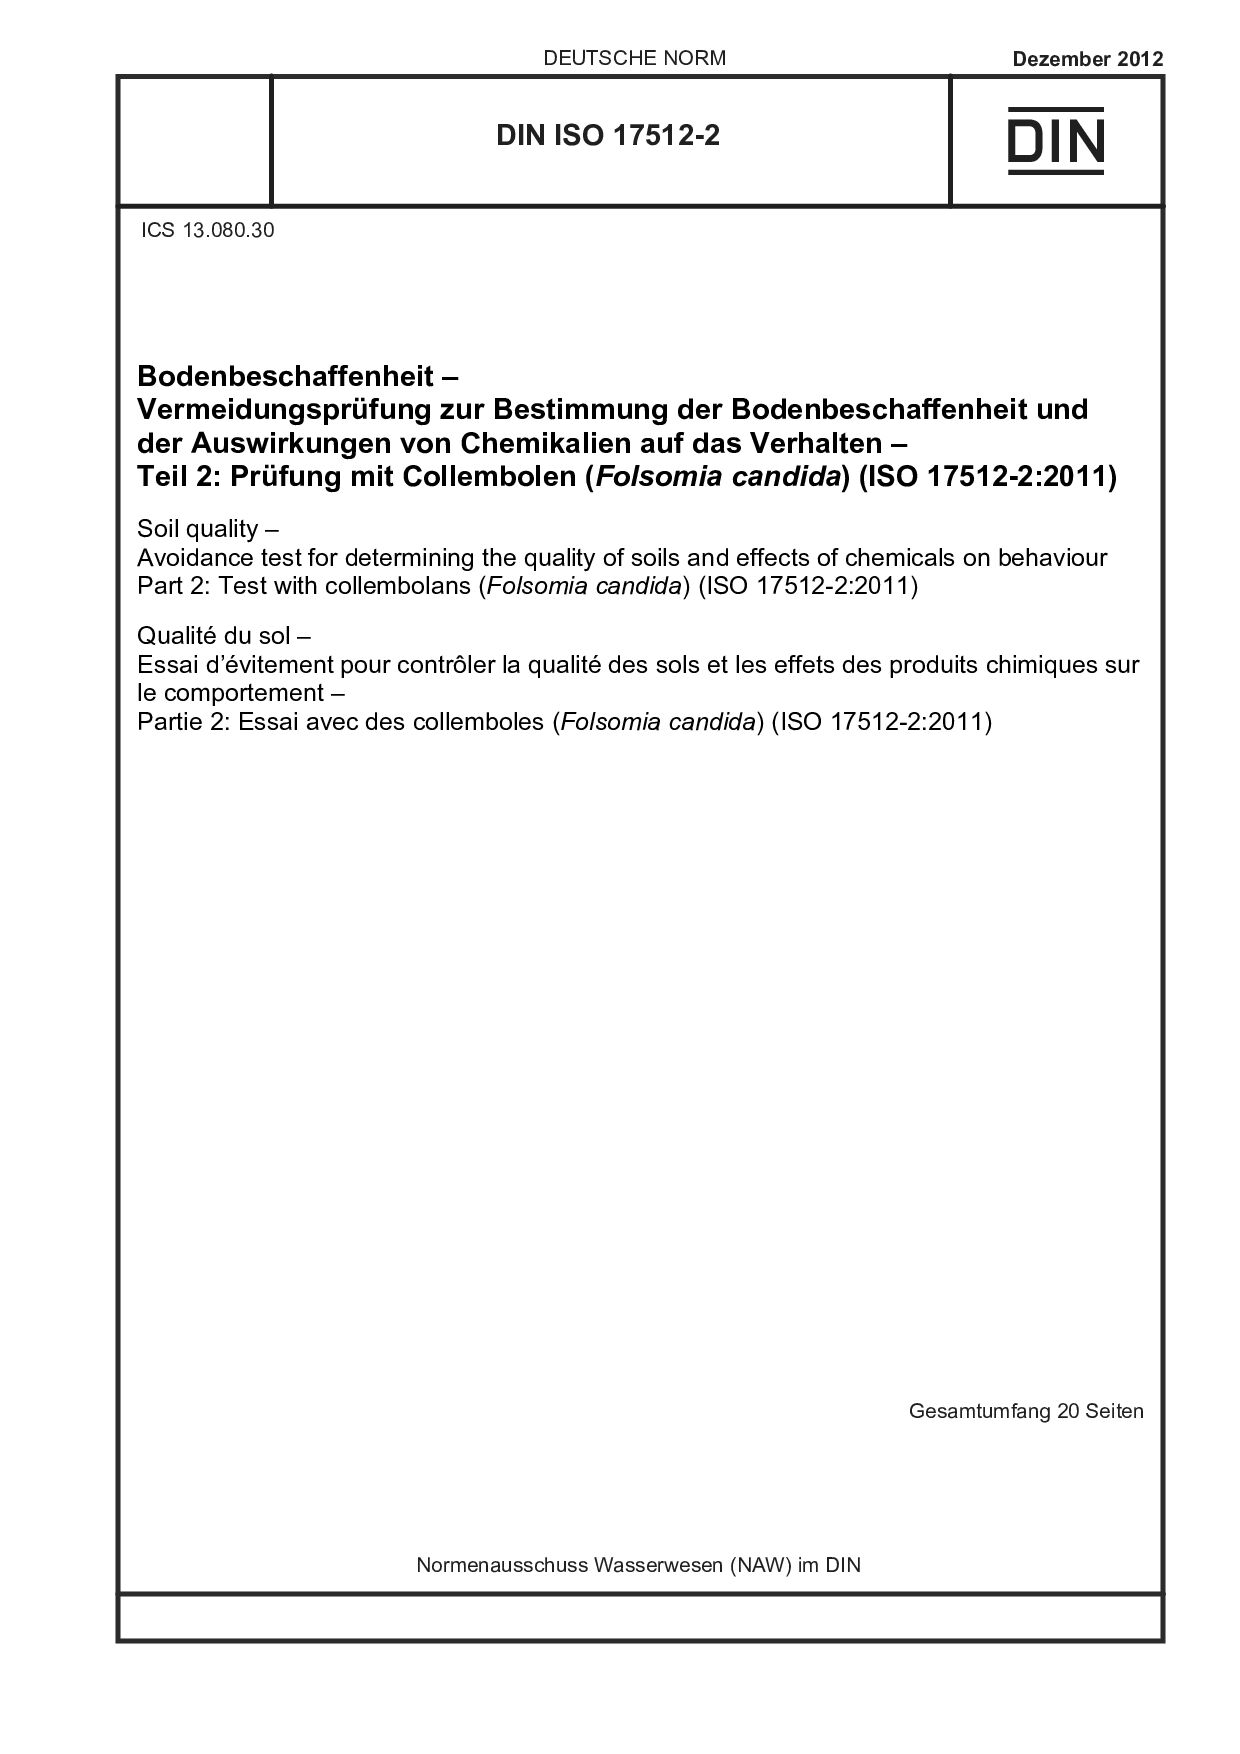 DIN ISO 17512-2:2012